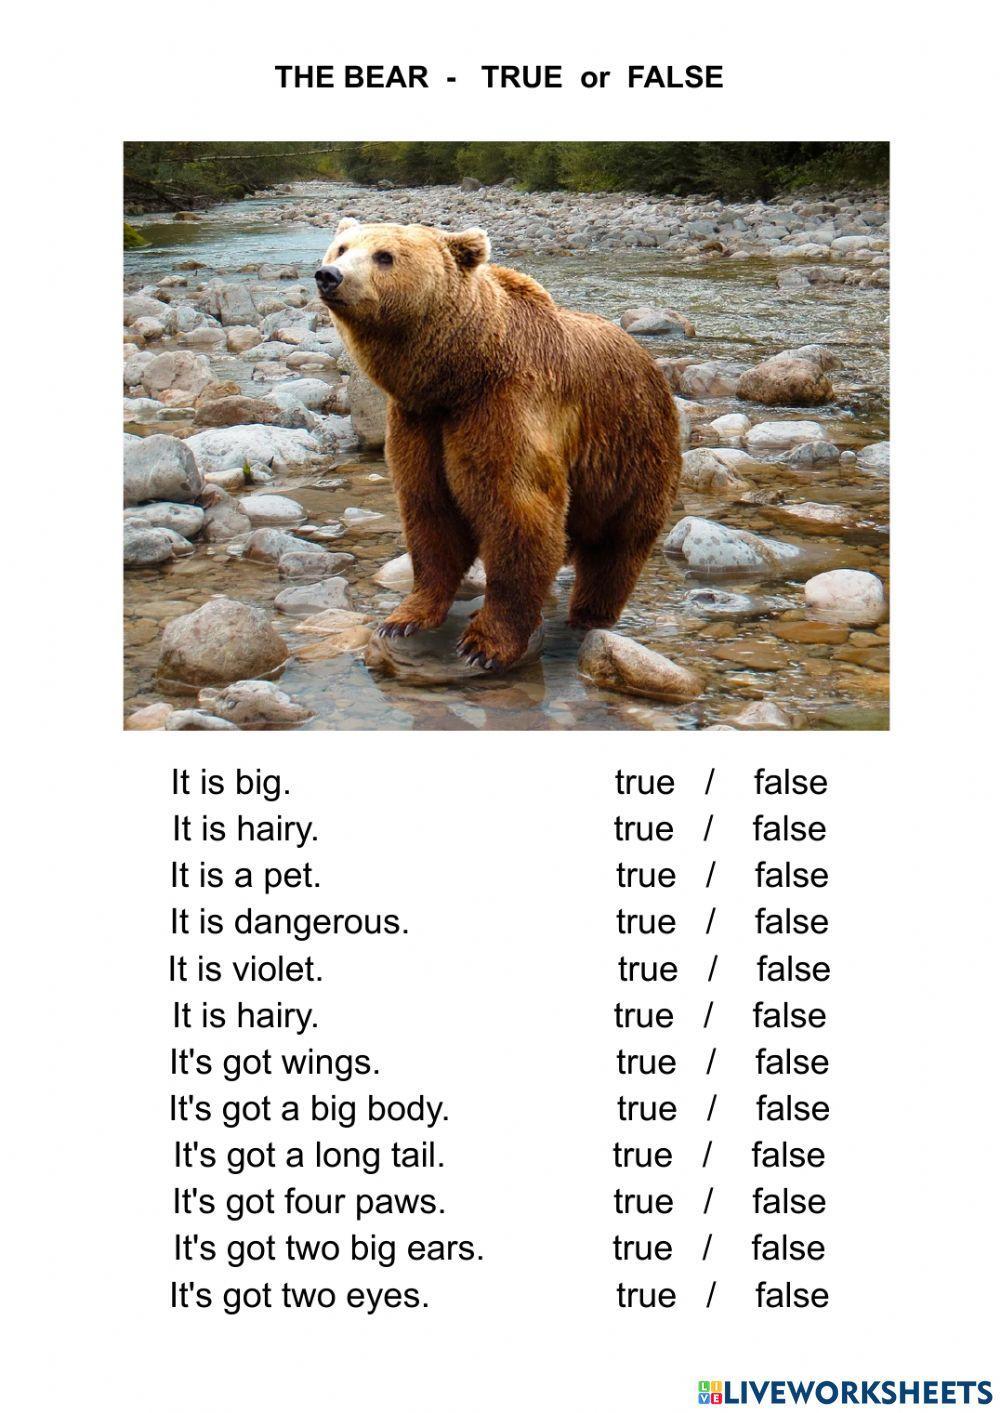 The bear - true or false